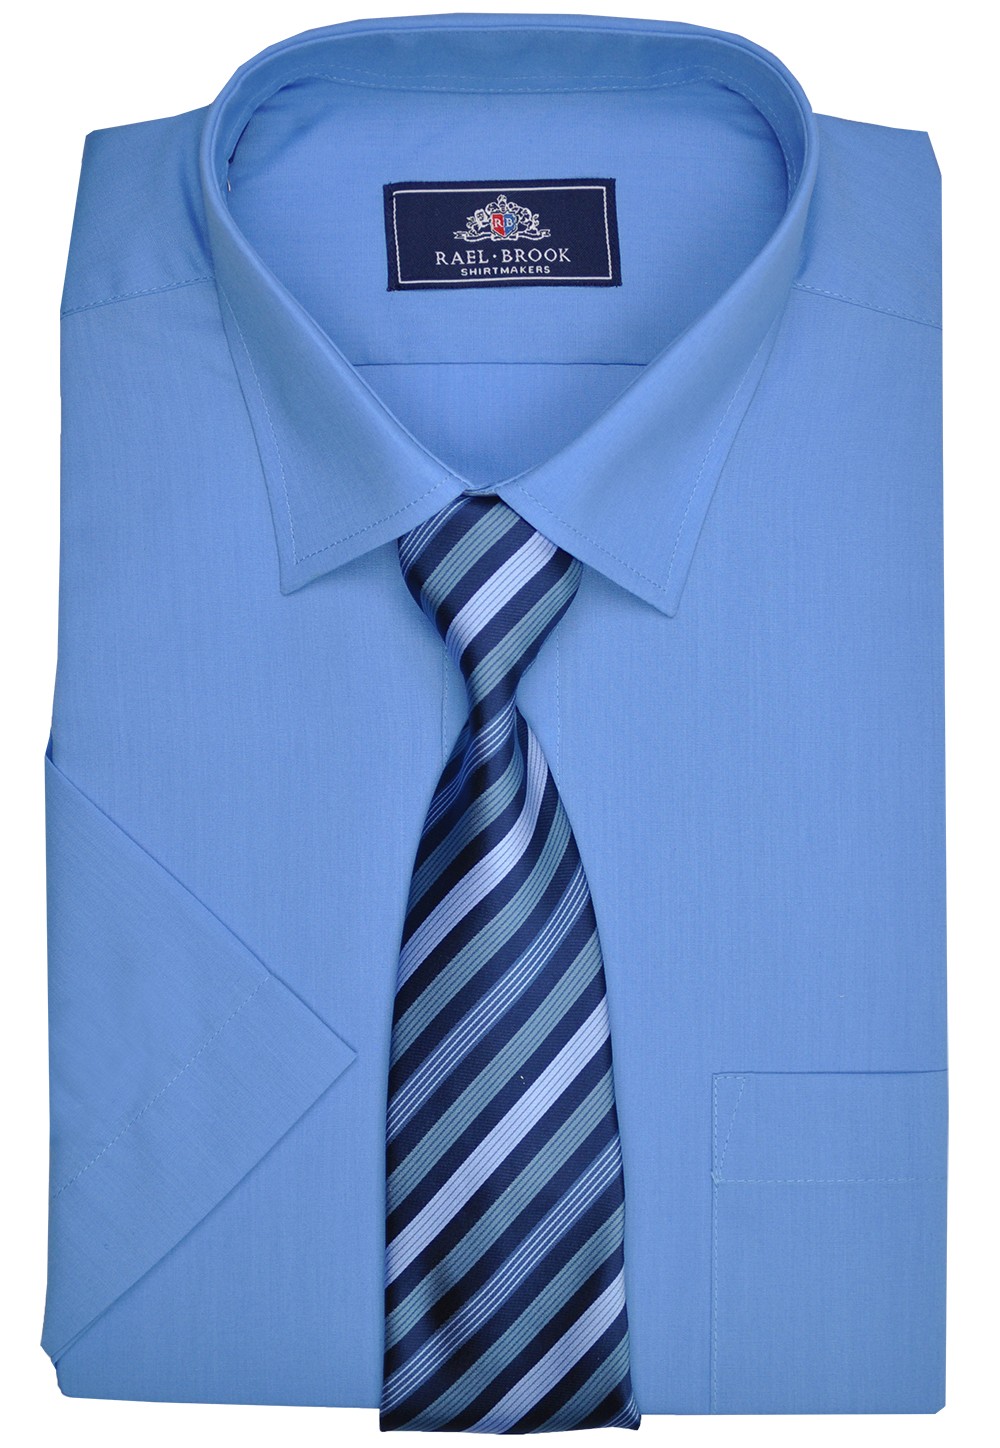 Rael Brook Shirt 78033 Mid Blue size 17